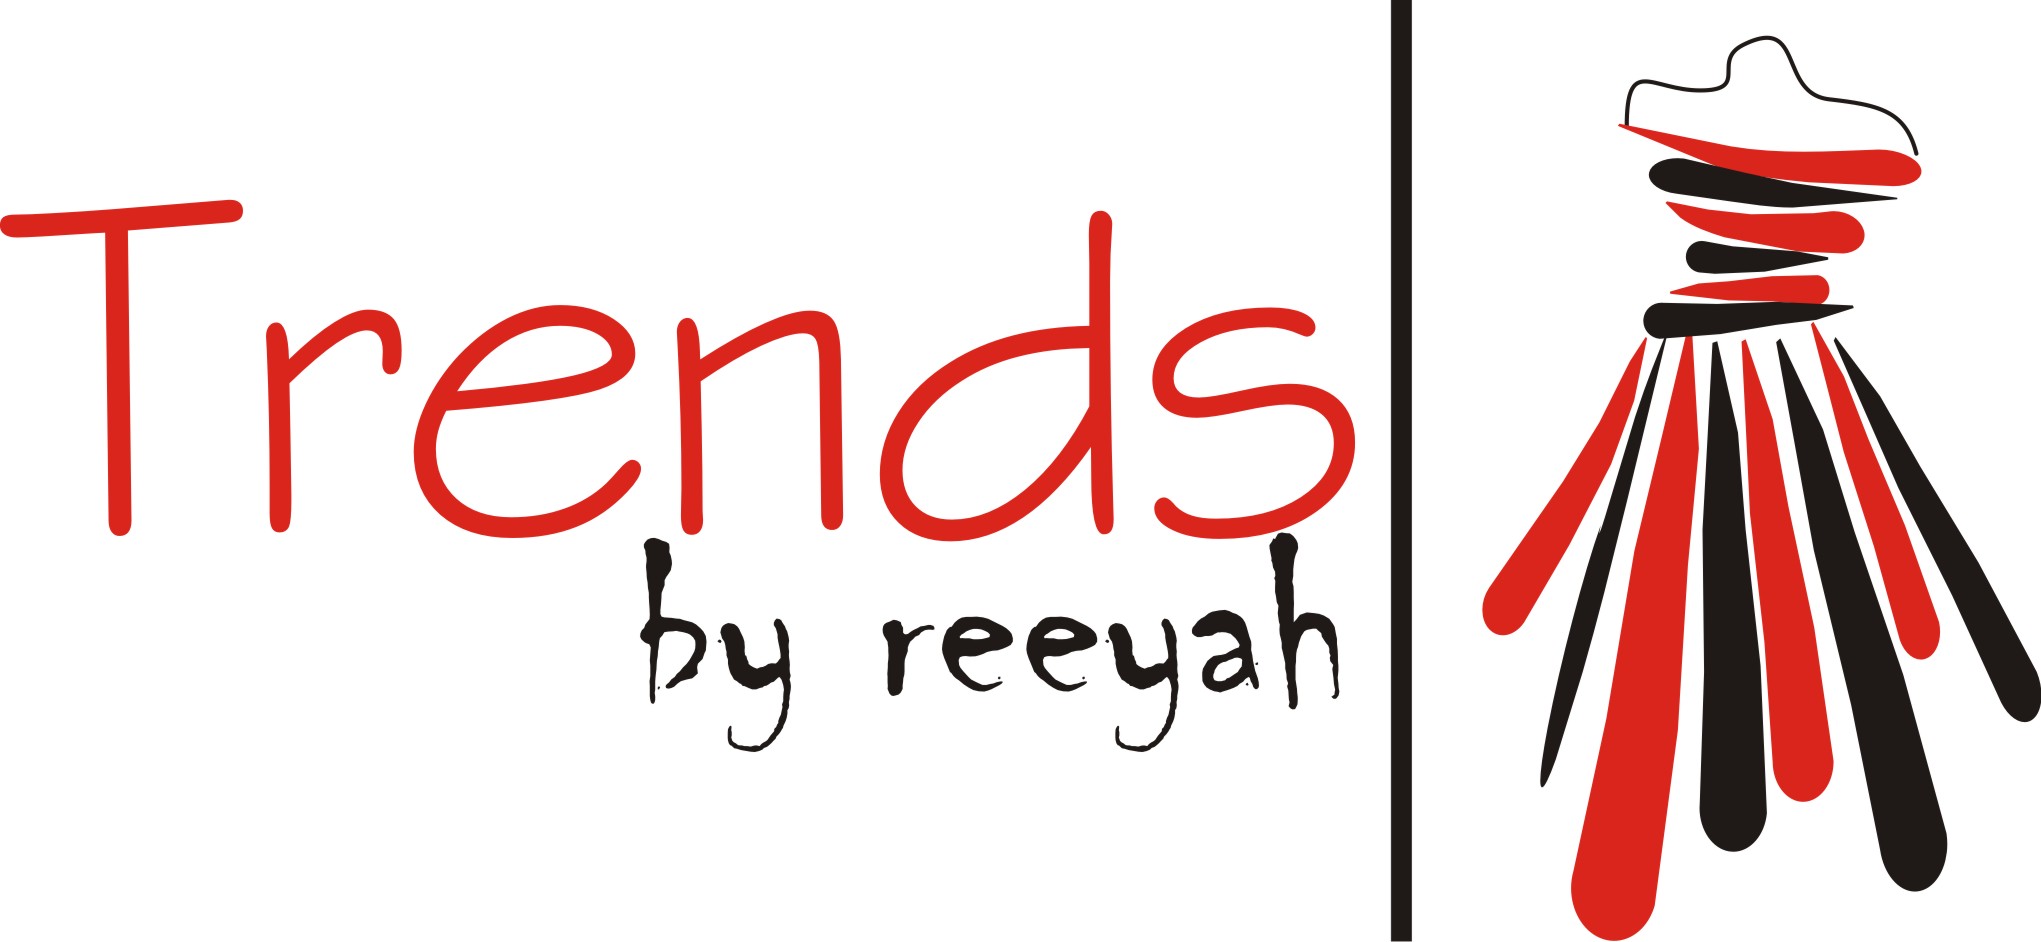 trends by Reekah.JPG